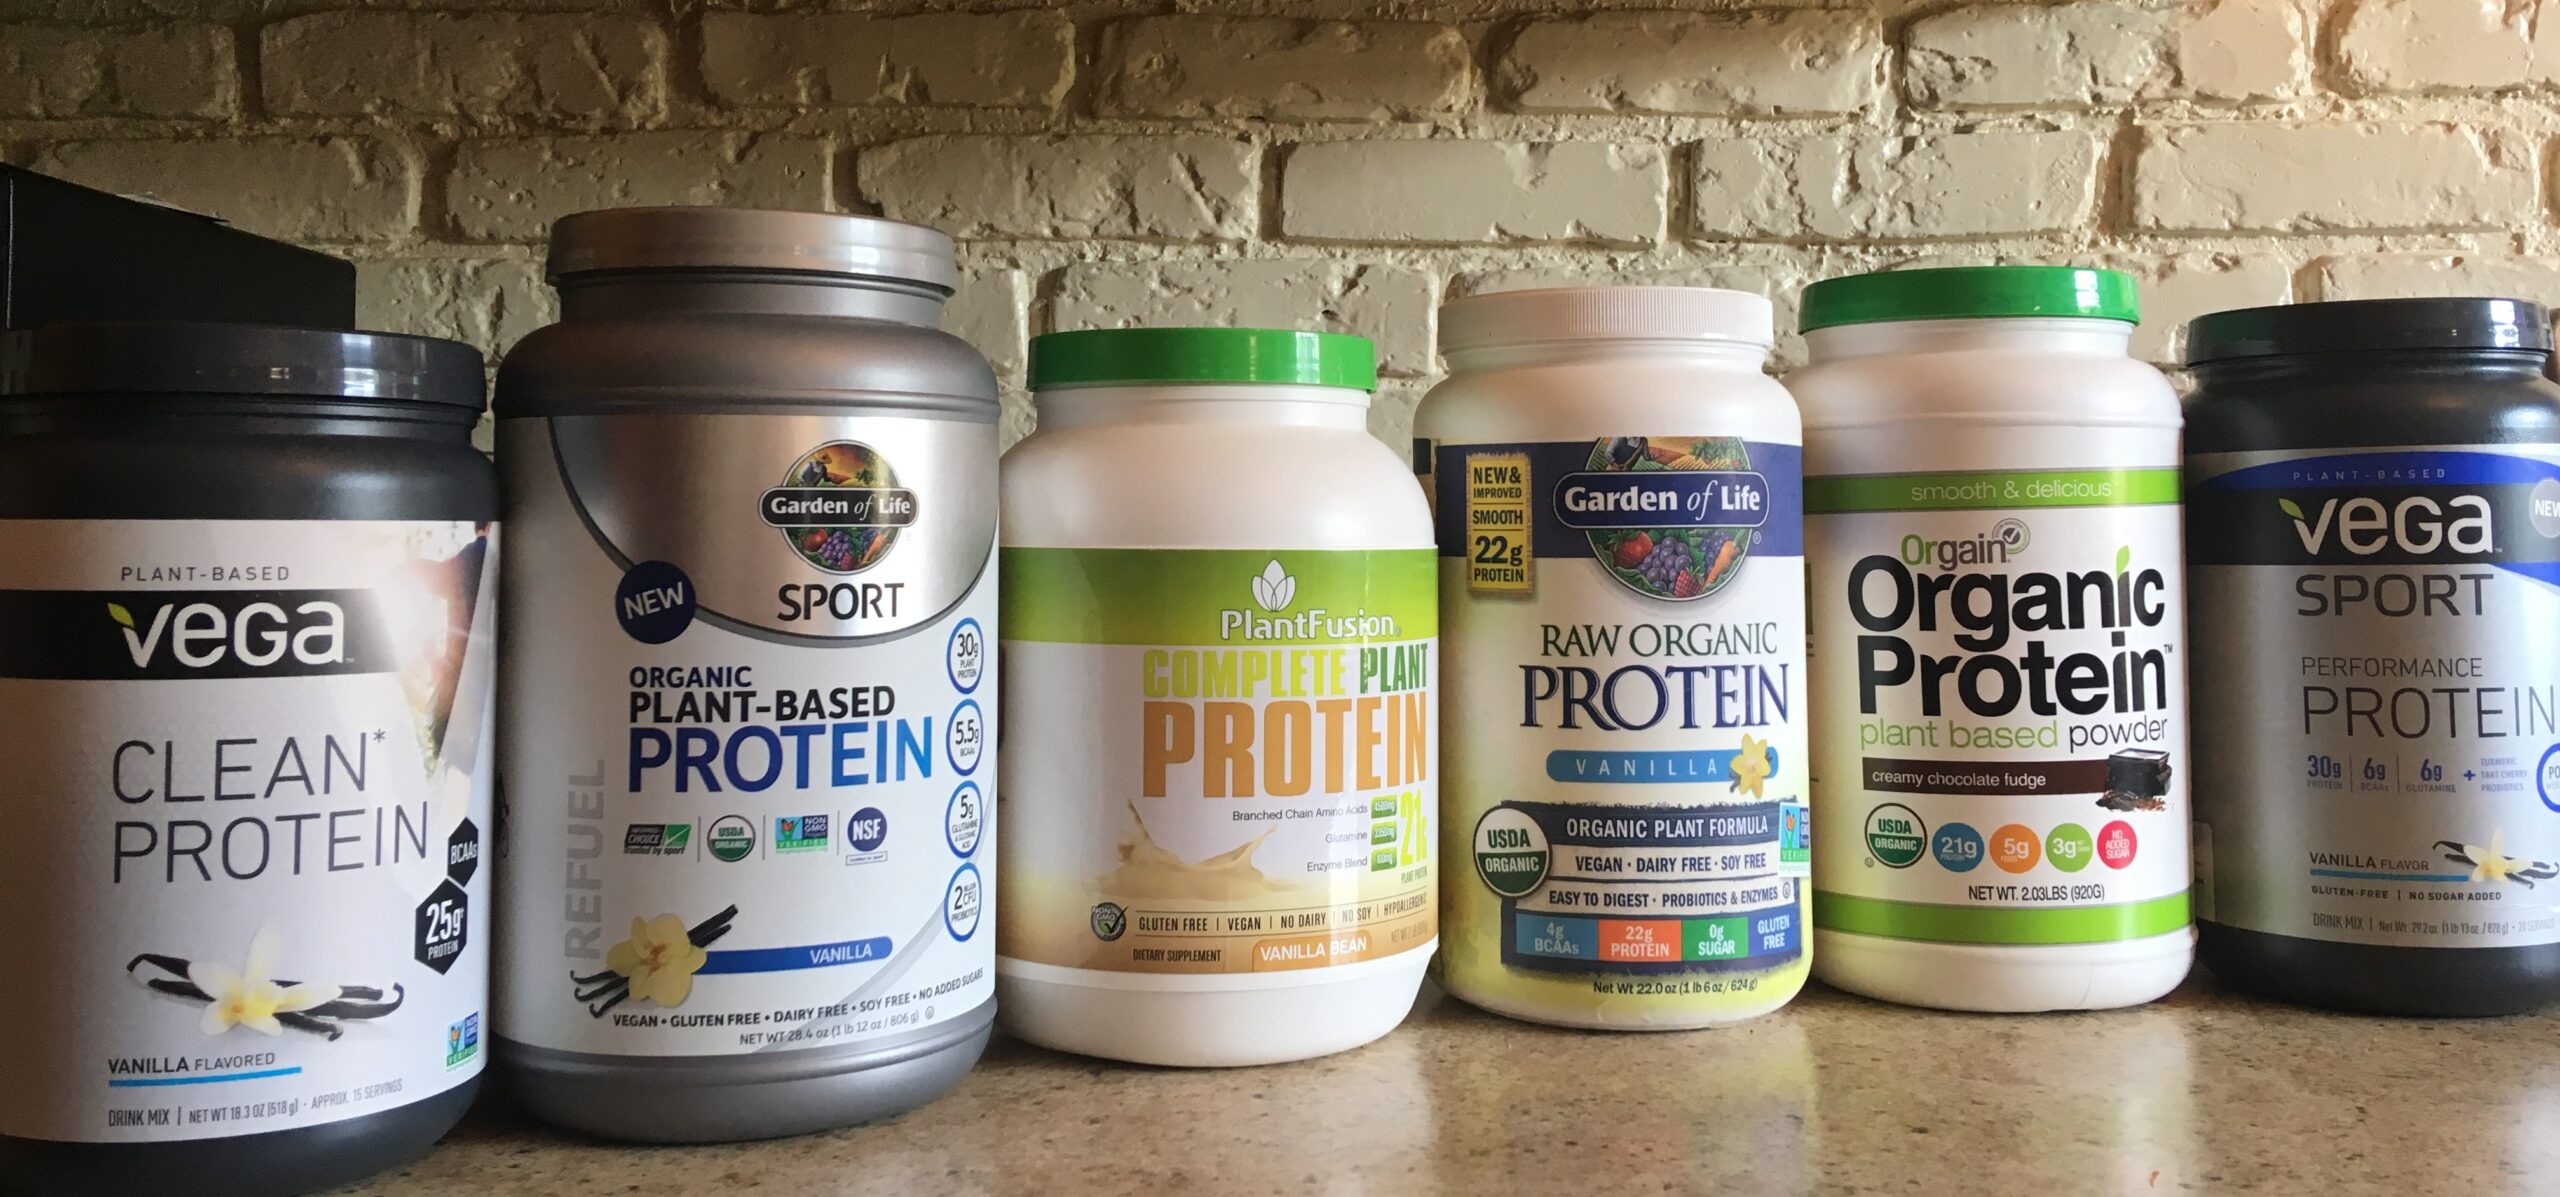 vegan plant-based protein powder vanilla flavors